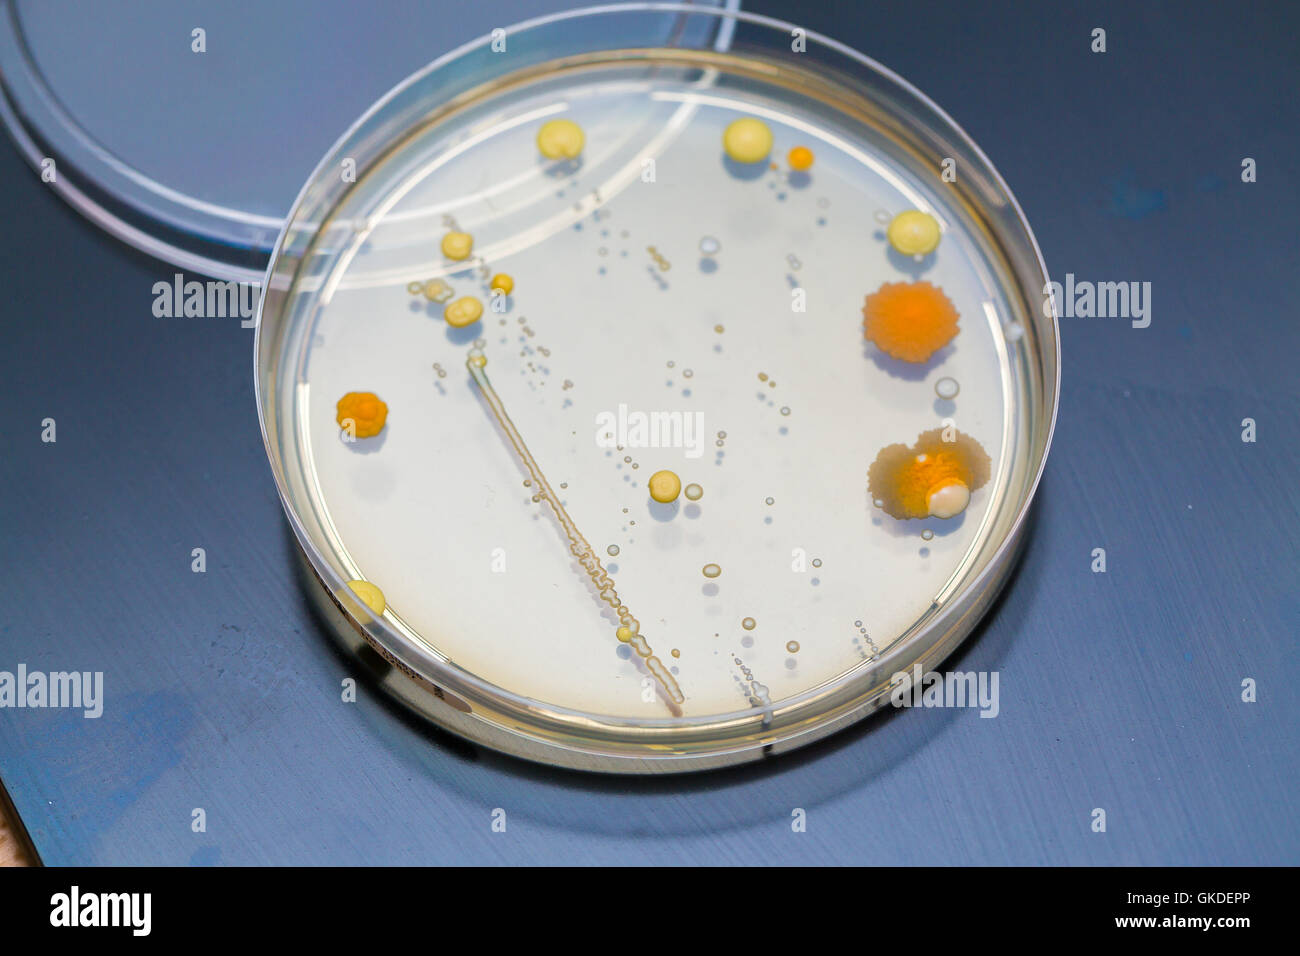 petri dish bacteria growth experiment Stock Photo